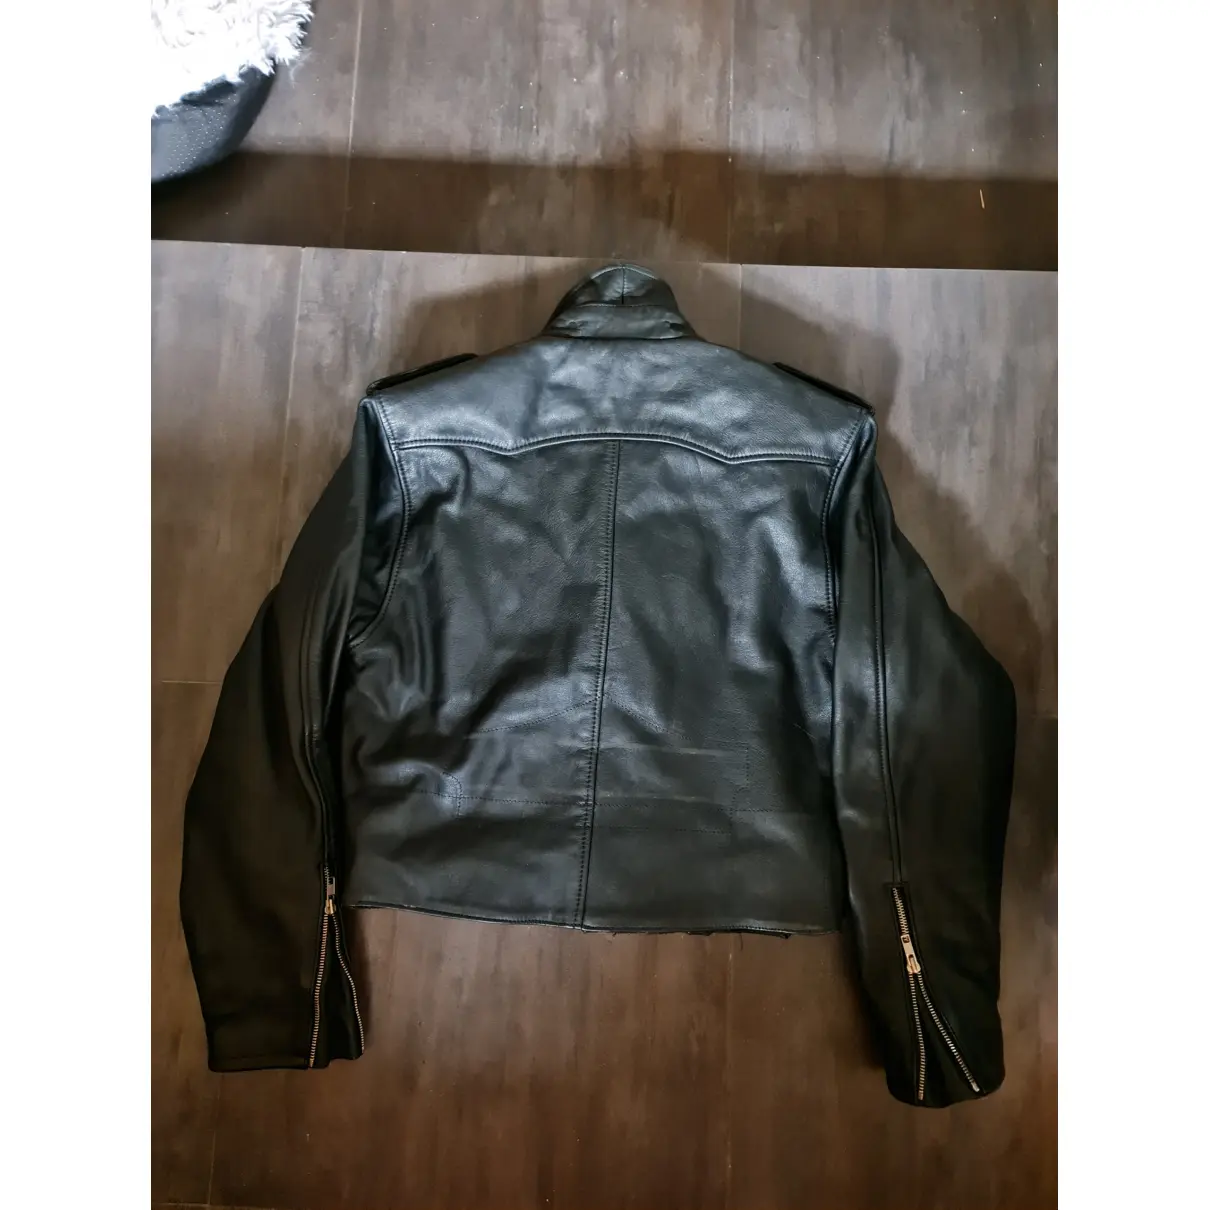 Leather jacket HARLEY DAVIDSON